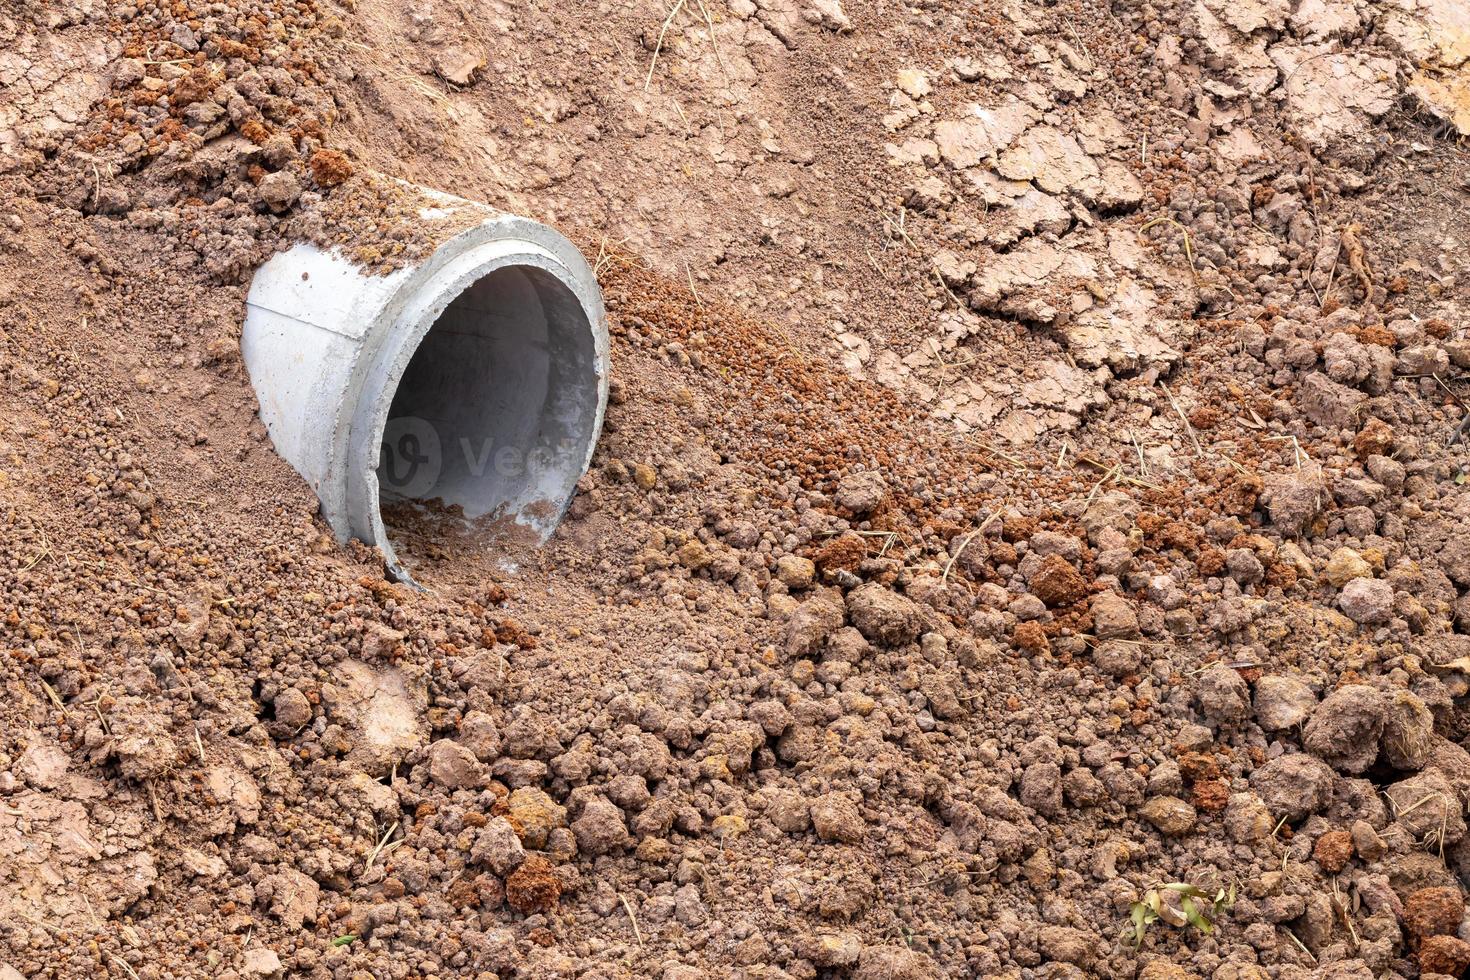 pequeno tubo de concreto enterrado em solo arenoso. foto